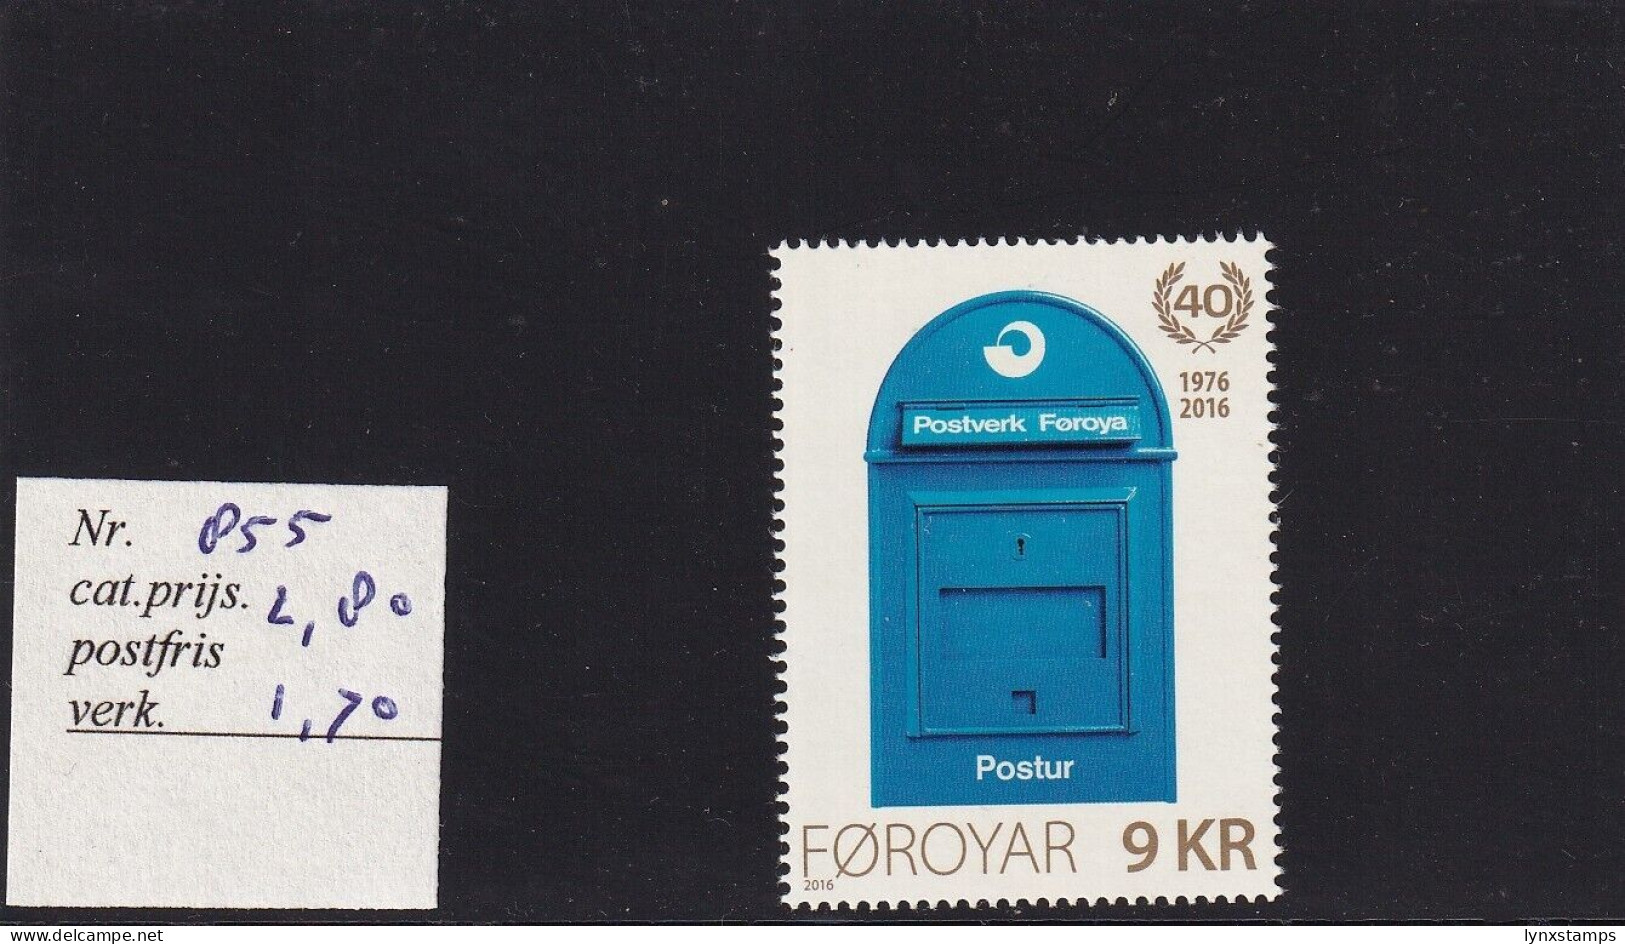 SA03 Faroe Islands 2016 The 40th Anniversary Of Postverk Føroya Mint Stamp - Färöer Inseln